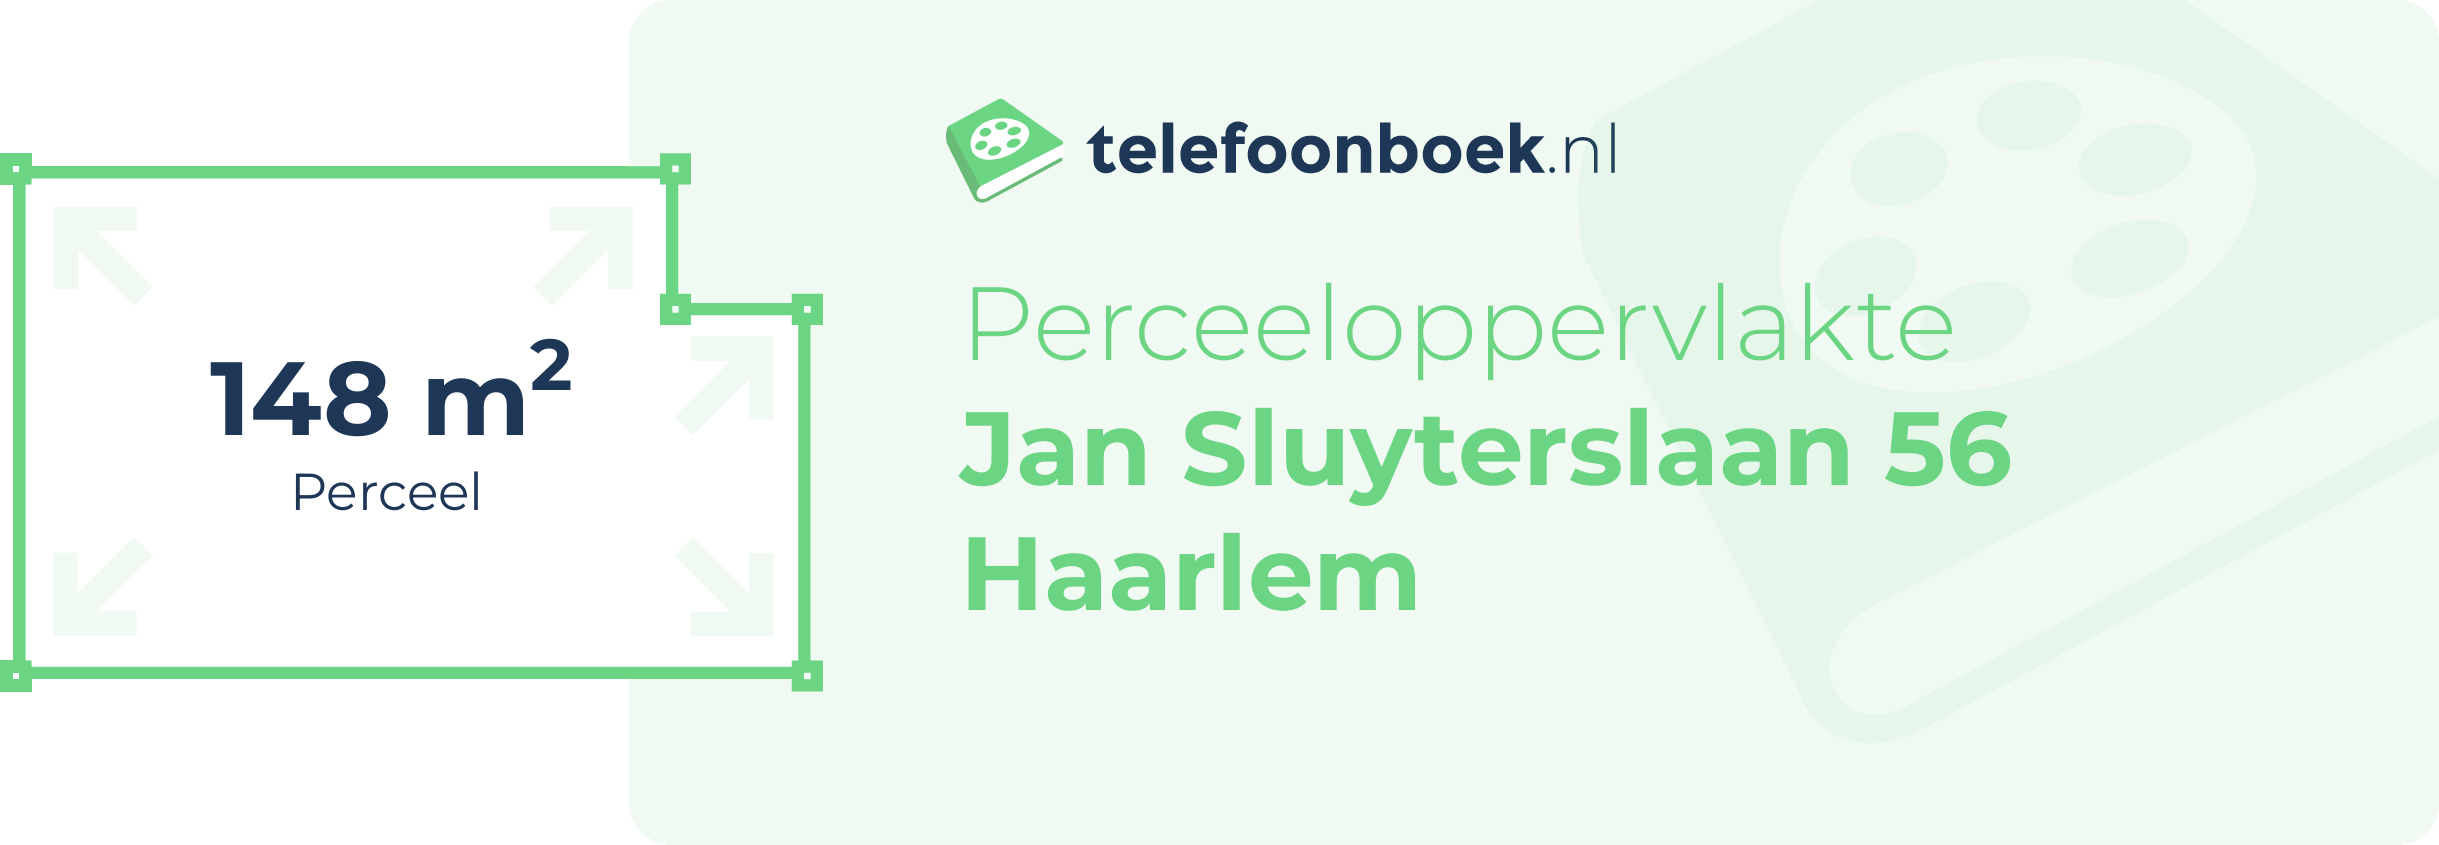 Perceeloppervlakte Jan Sluyterslaan 56 Haarlem